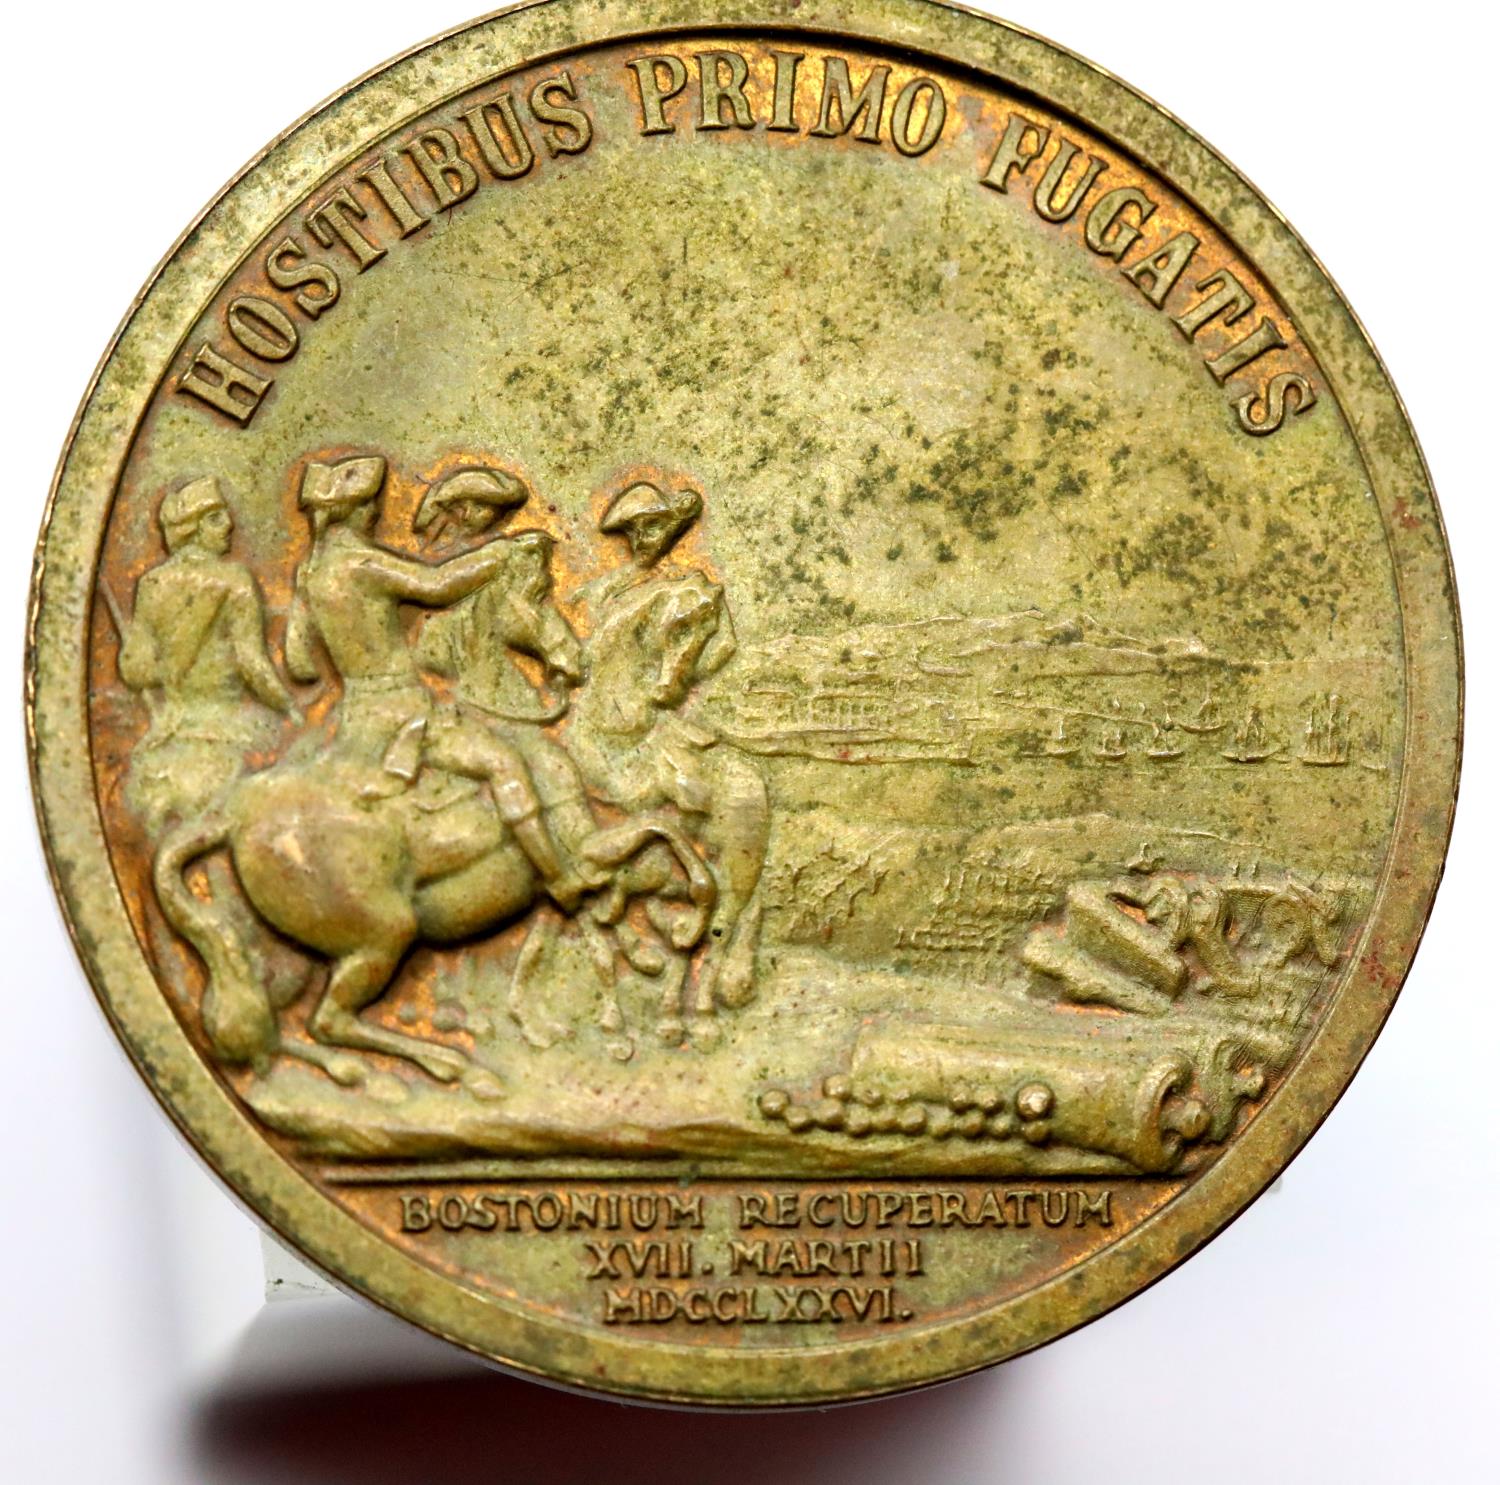 George Washington Medallion - USA - Hostibus Primo Fugatis. P&P Group 1 (£14+VAT for the first lot - Image 2 of 2